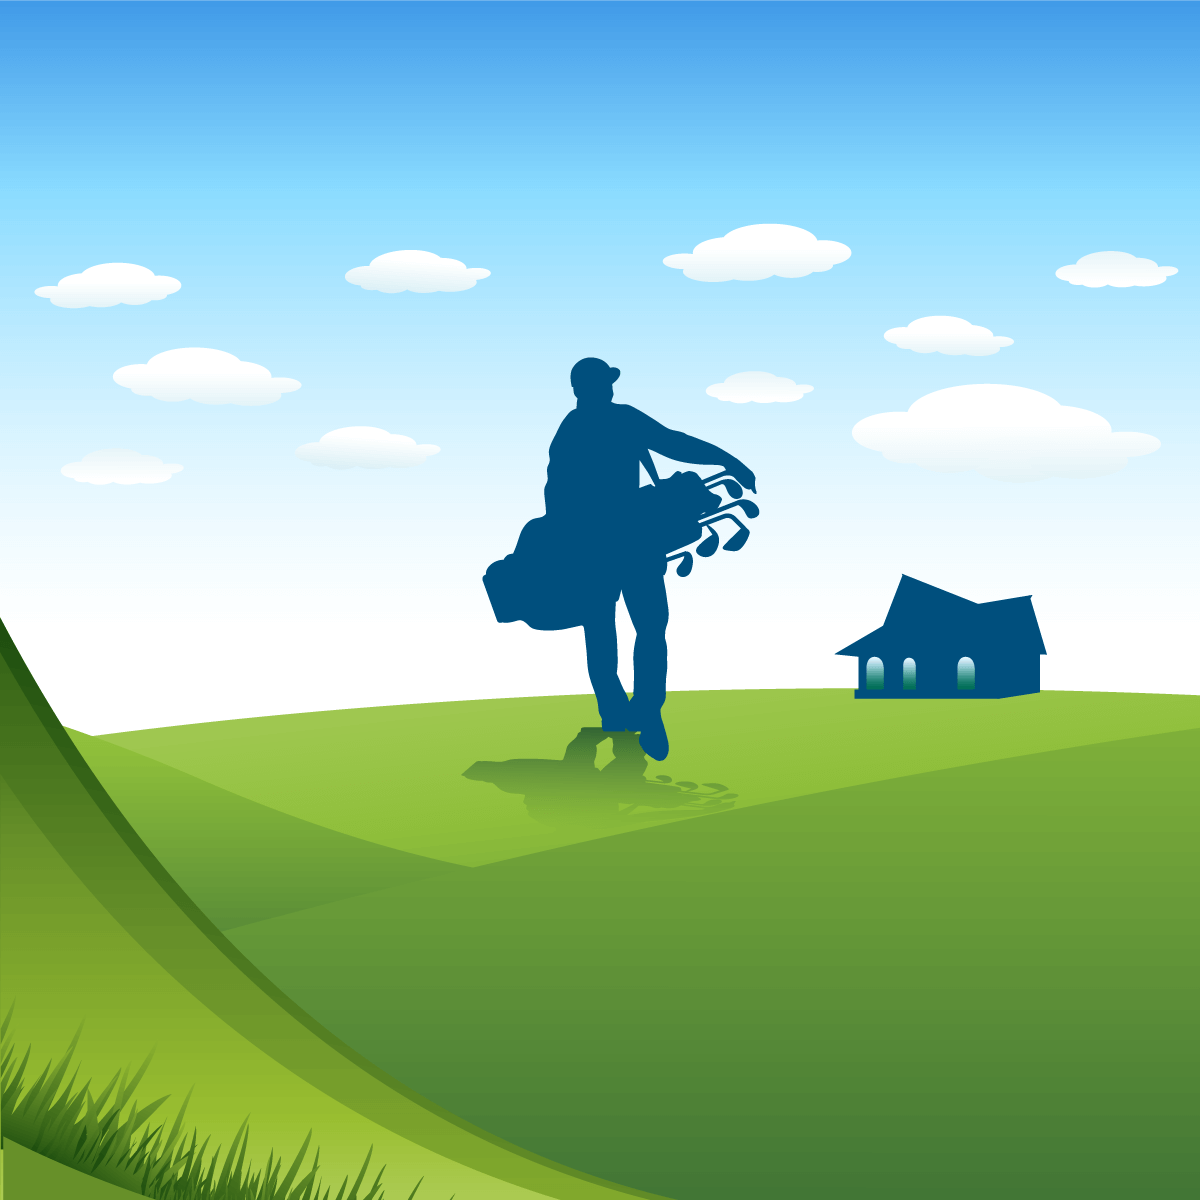 illustration of man with golf bag